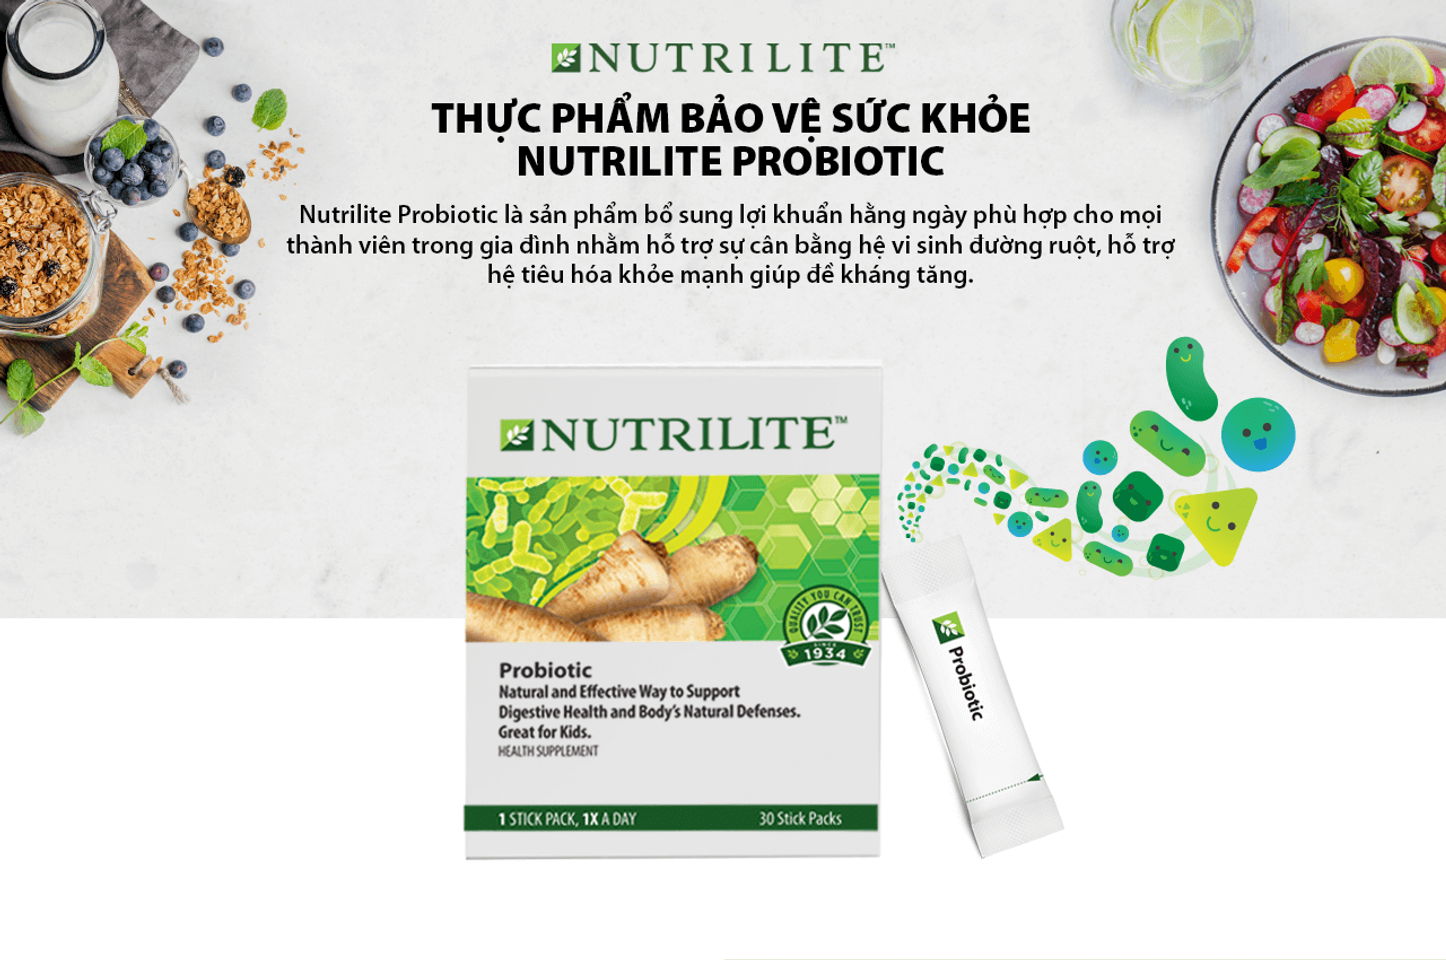 TP BVSK Nutrilite Probiotic Men tiêu hóa 1